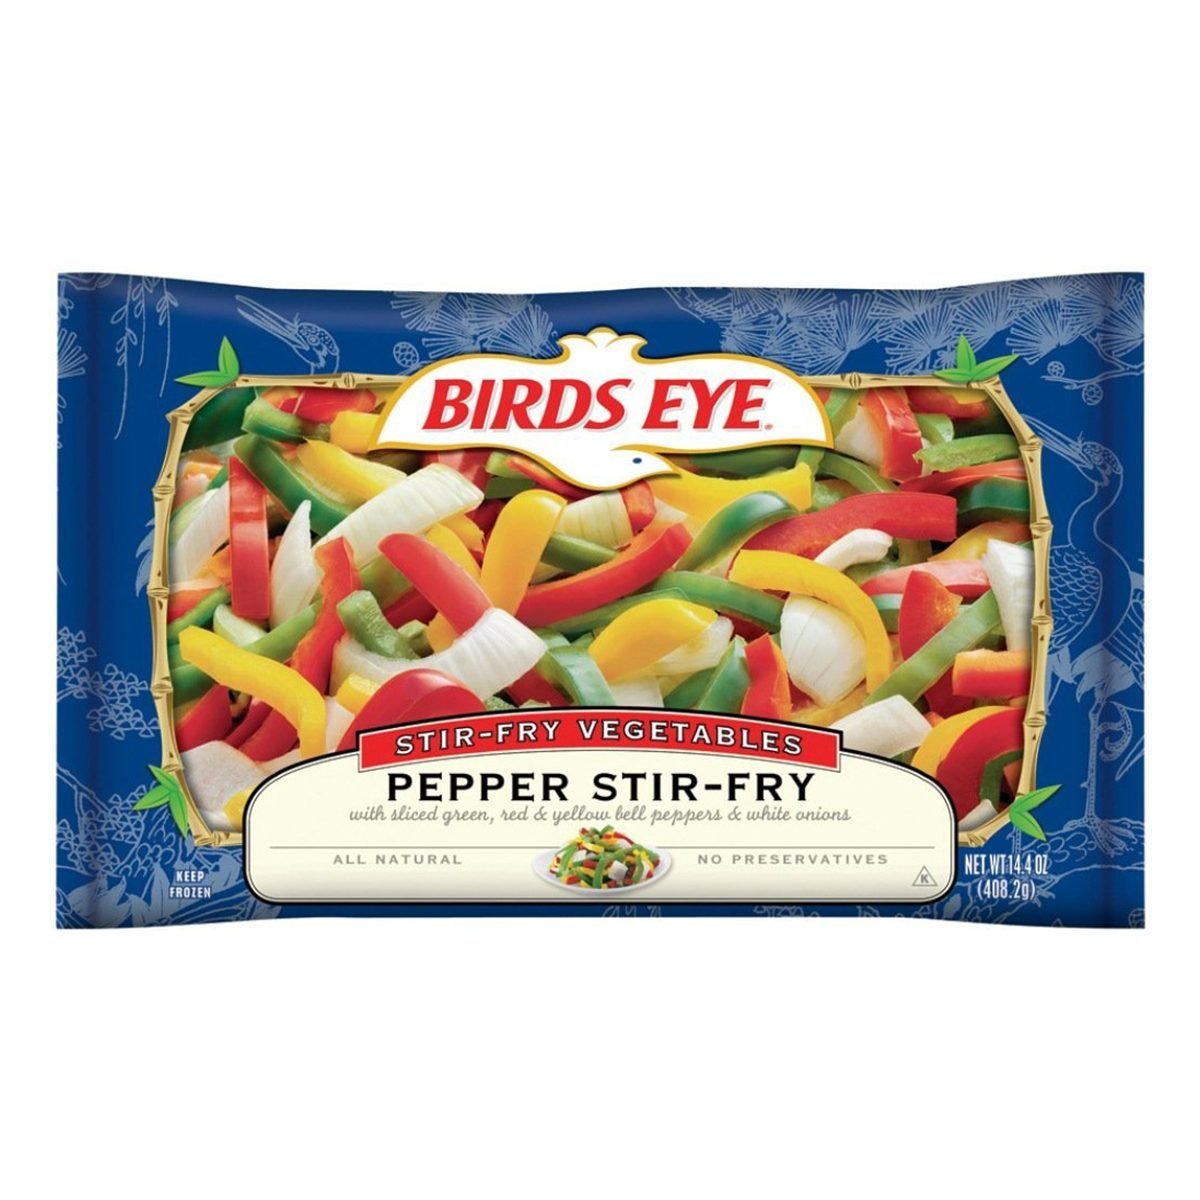 Birds Eye, amazon, stir fry, product